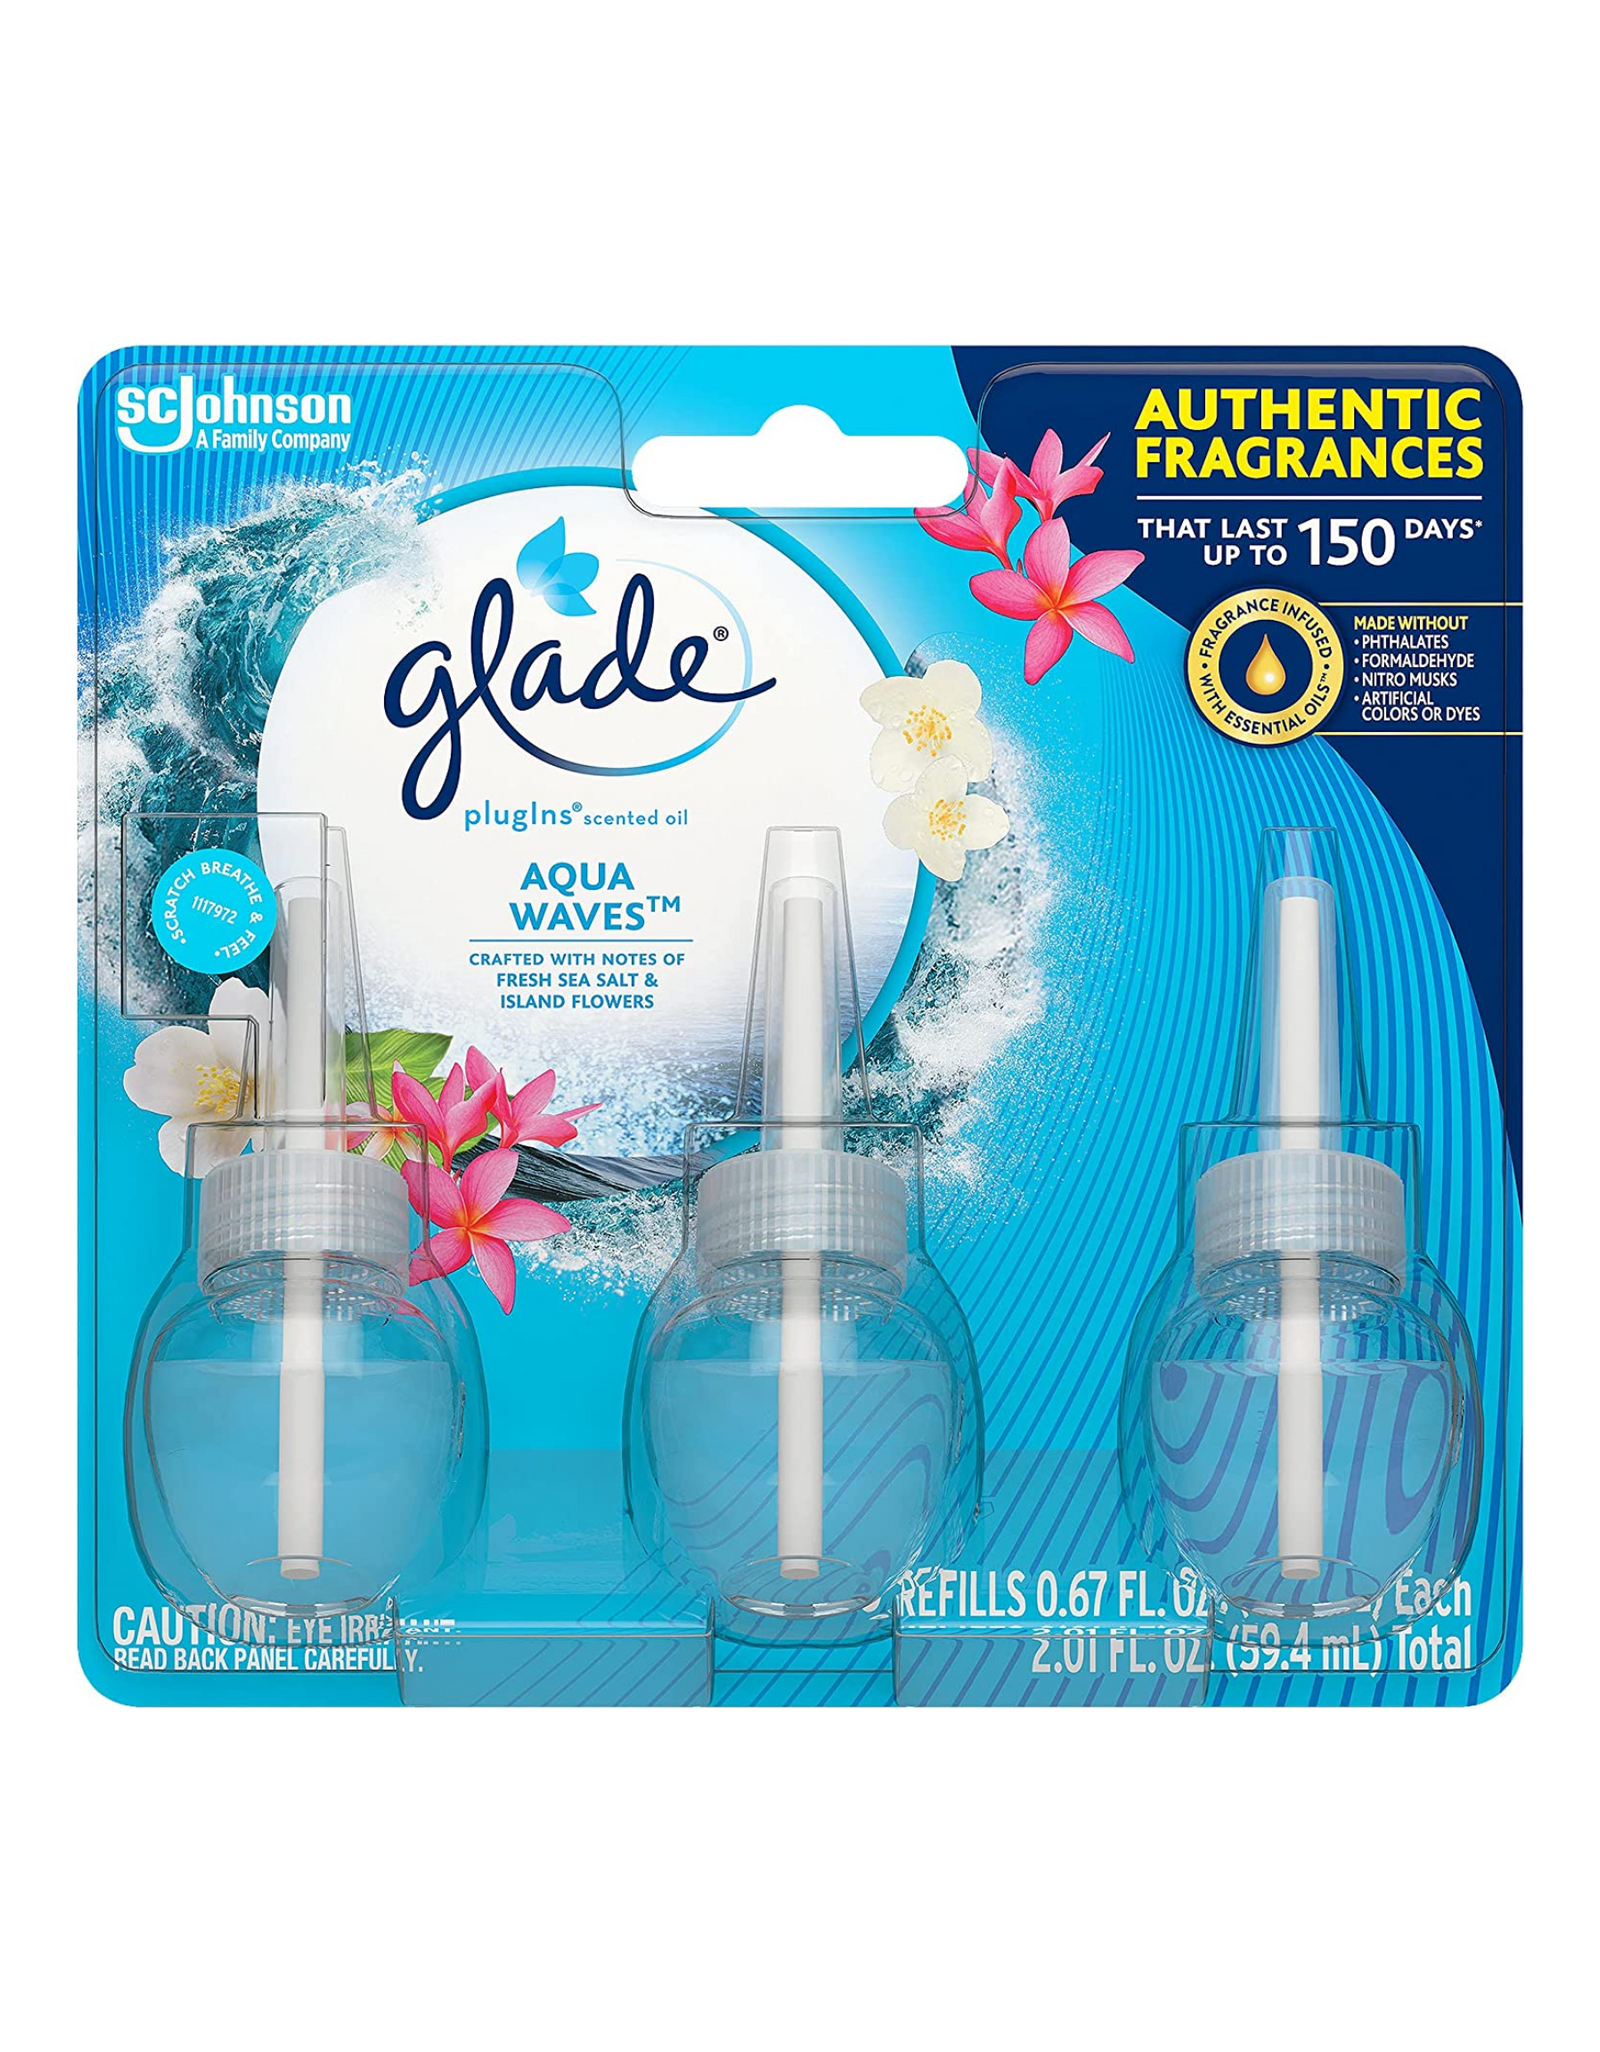 Glade PlugIns Refills Air Freshener, Scented Oil, Aqua Waves, 2.01 fl oz, 3 Ct